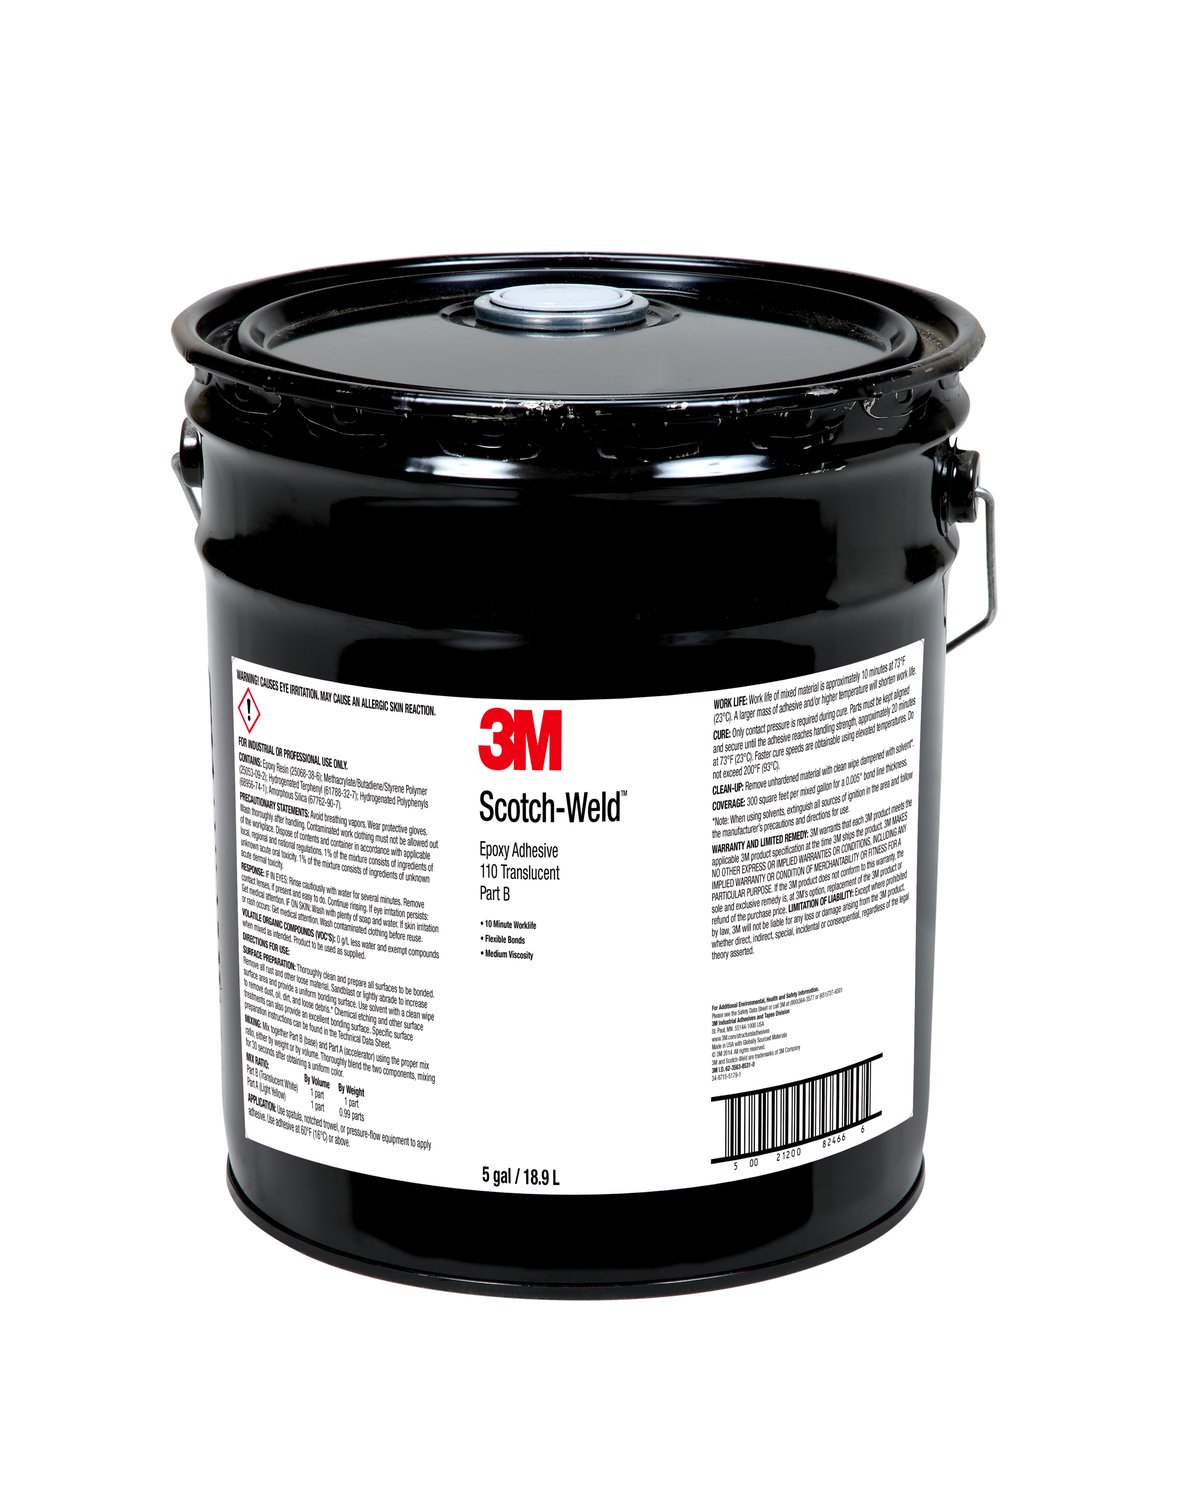 7010366143 - 3M Scotch-Weld Epoxy Adhesive 110, Translucent, Part B, 5 Gallon
(Pail), Drum